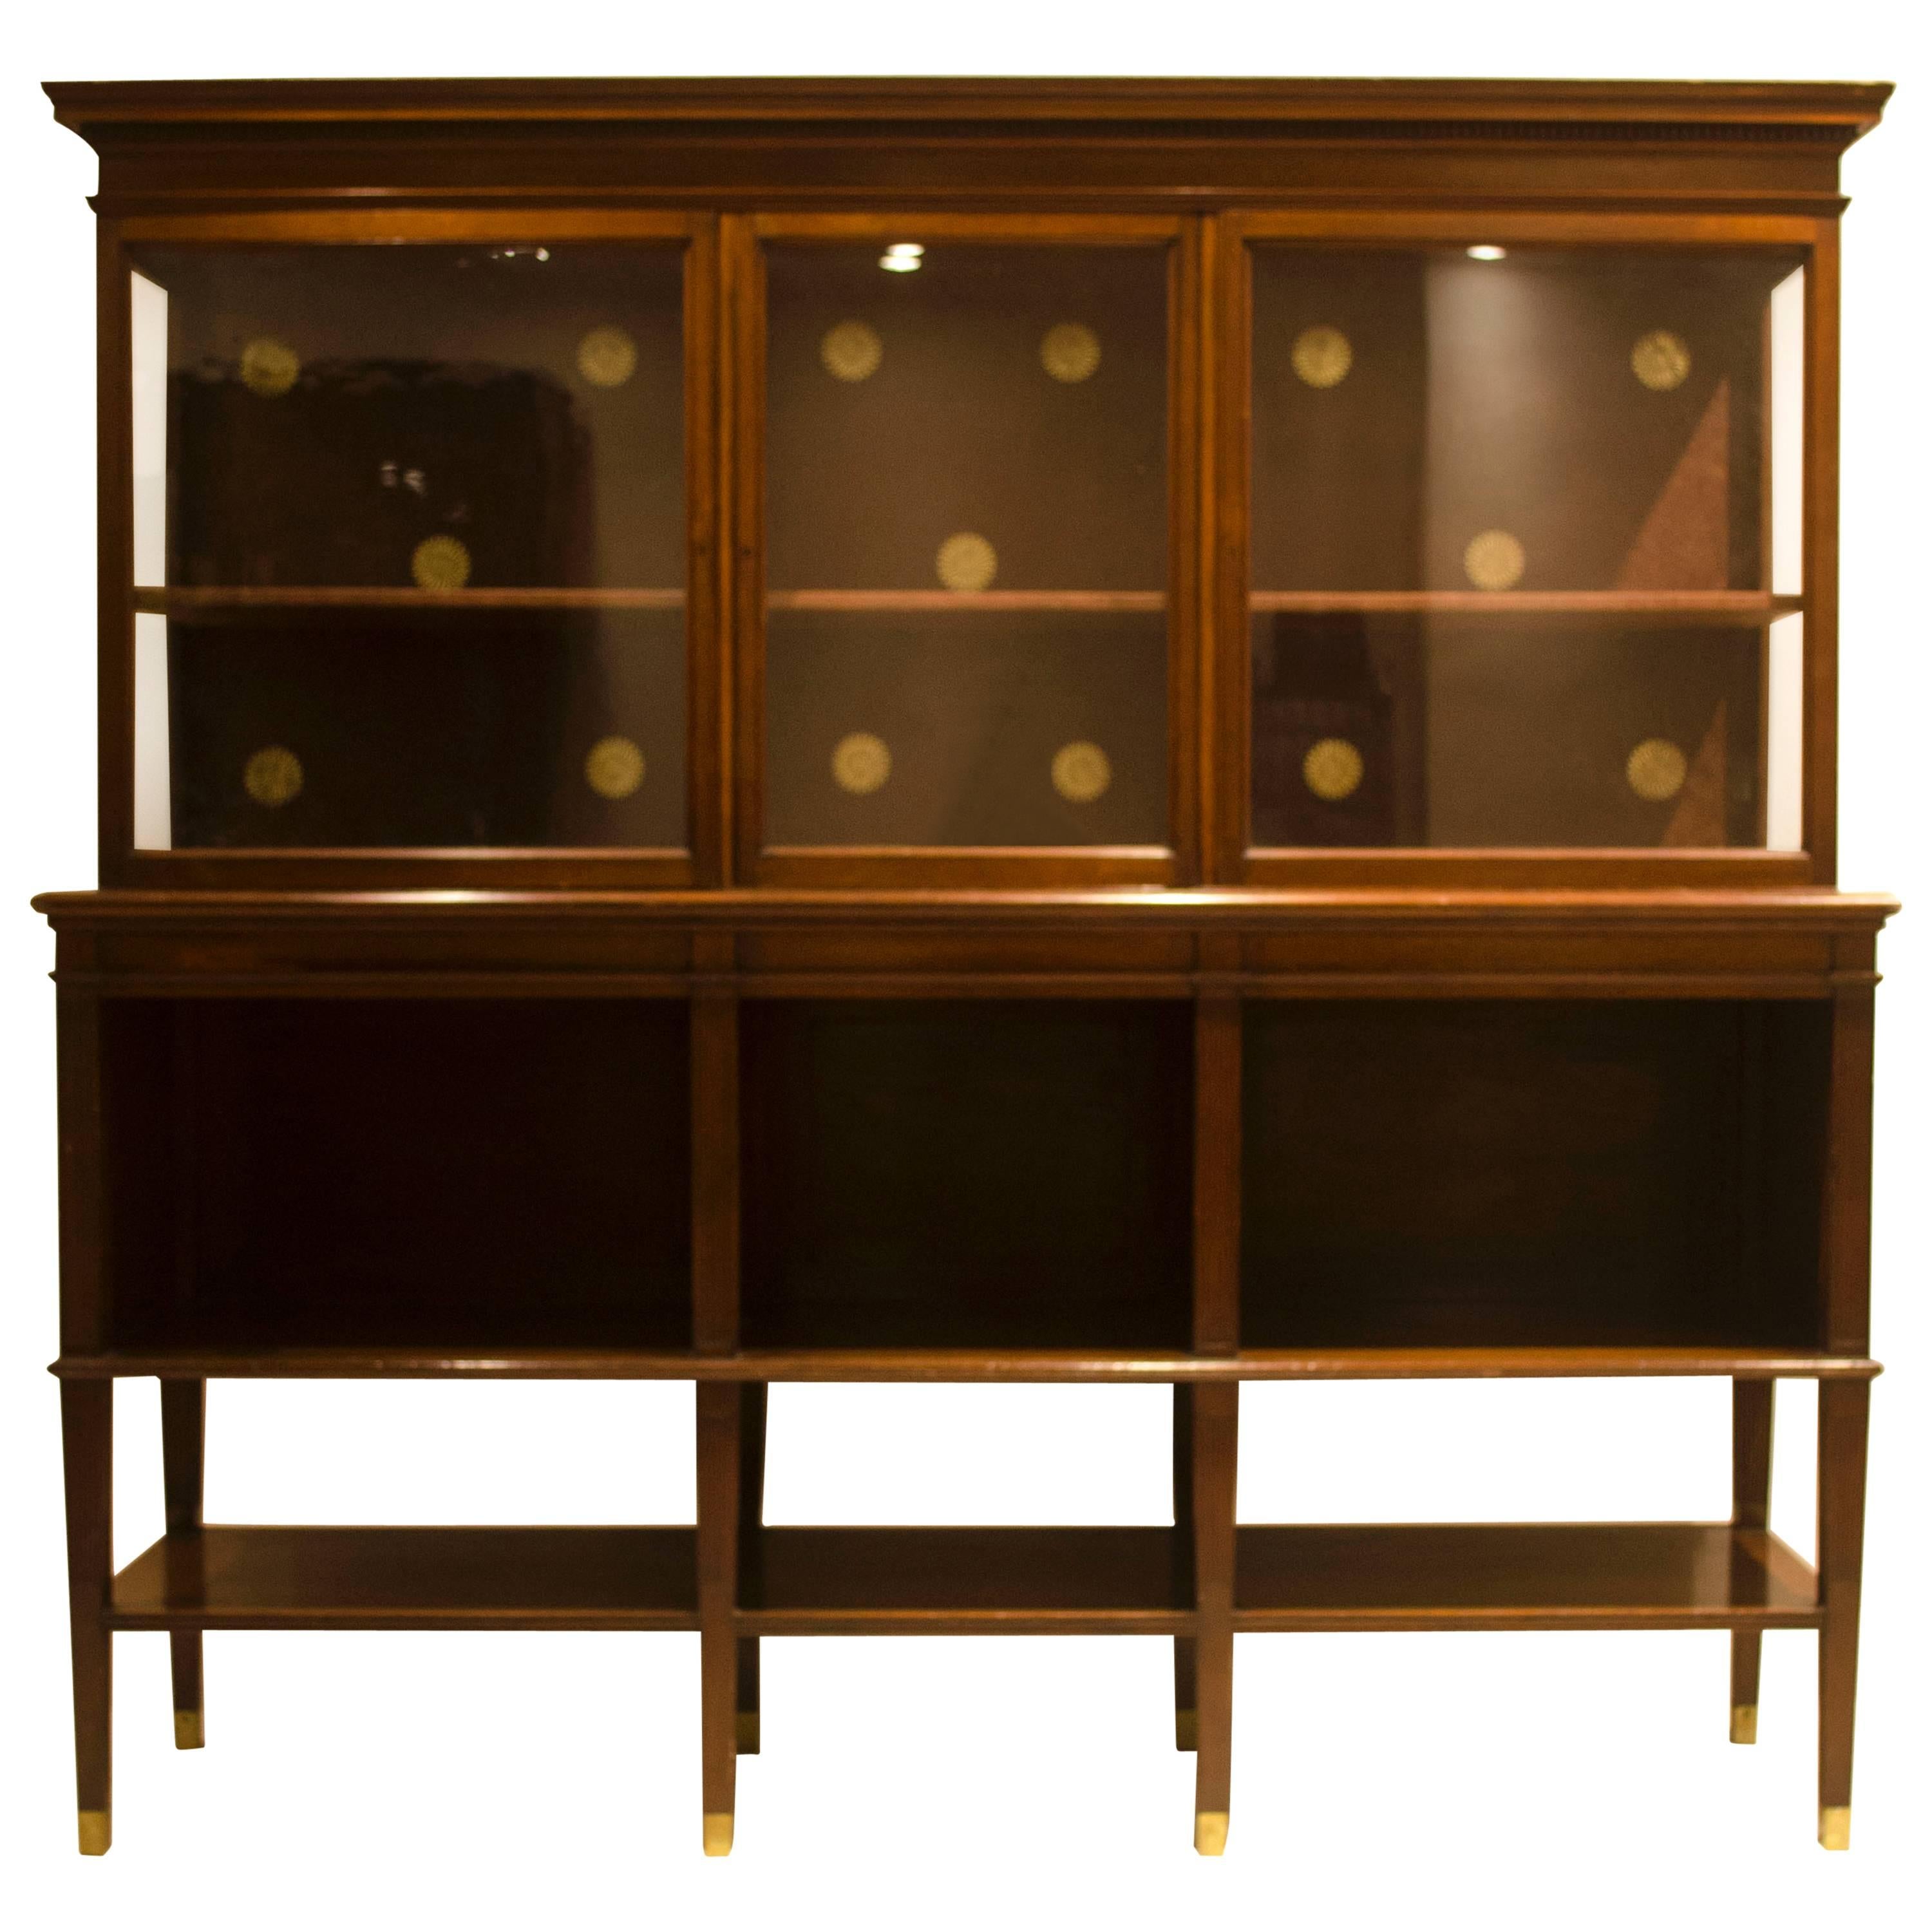 E W Godwin, for Collinson & Lock. An Anglo-Japanese Walnut & Glazed Side Cabinet